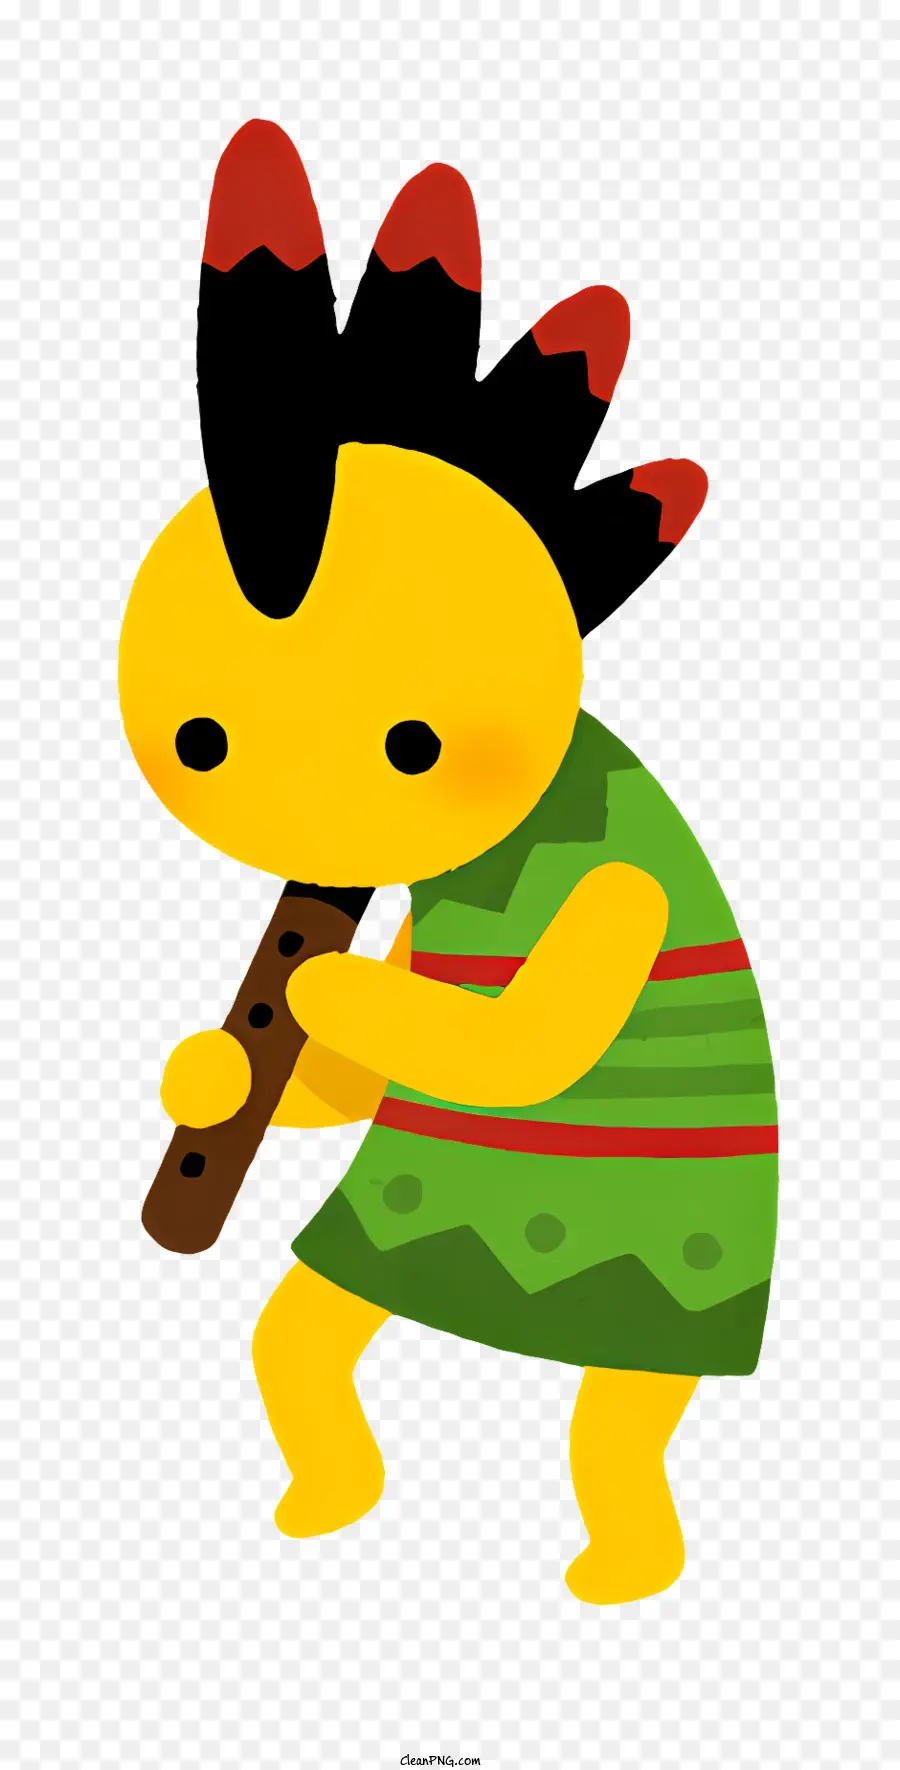 fantasy figure cartoon character red and green dress musical instrument sticks